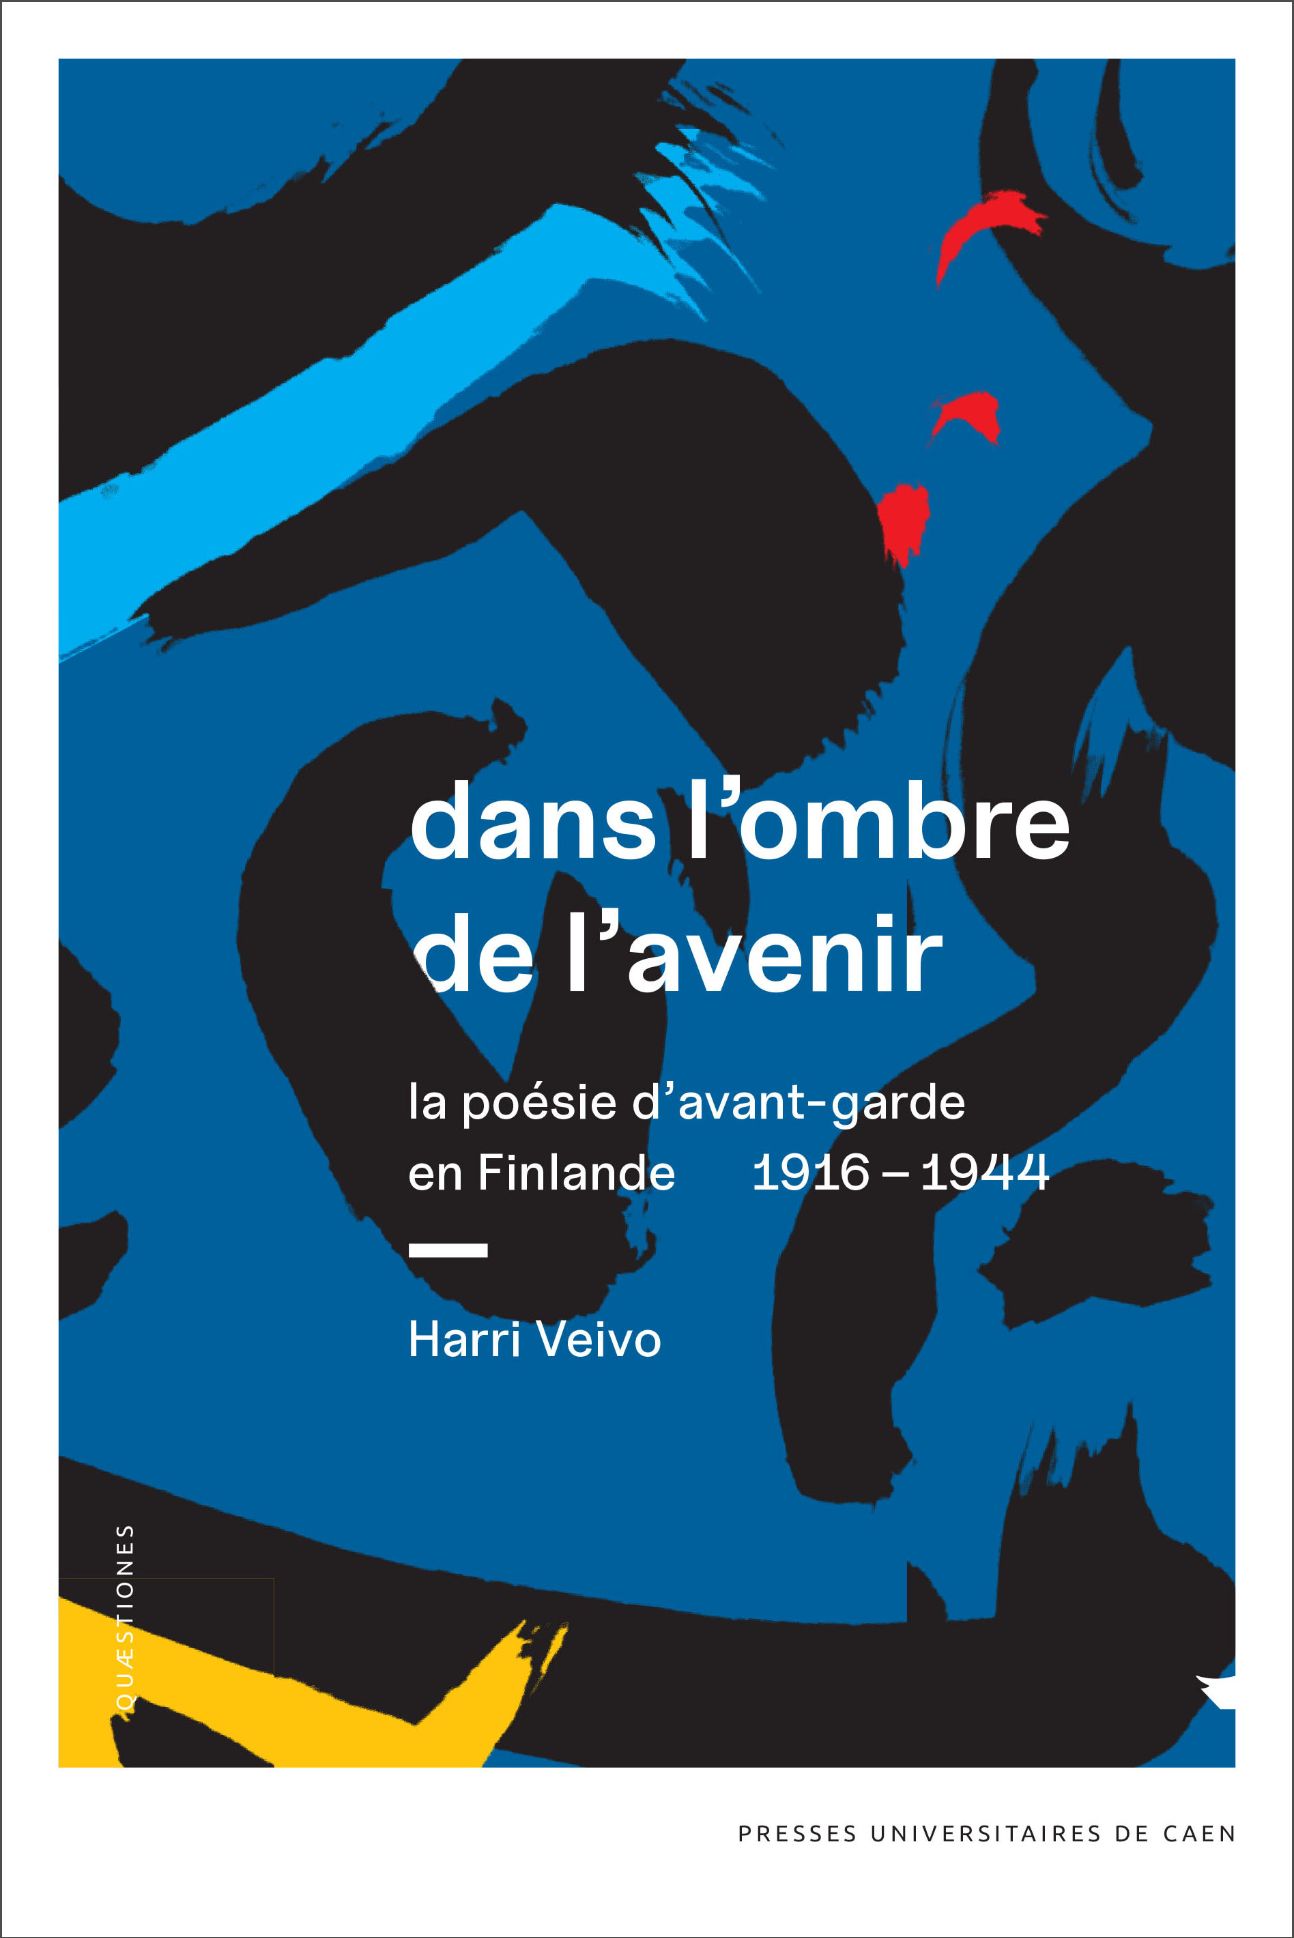 Harri Veivo, Dans l'ombre de l'avenir. La poésie d'avant-garde en Finlande, 1916-1944